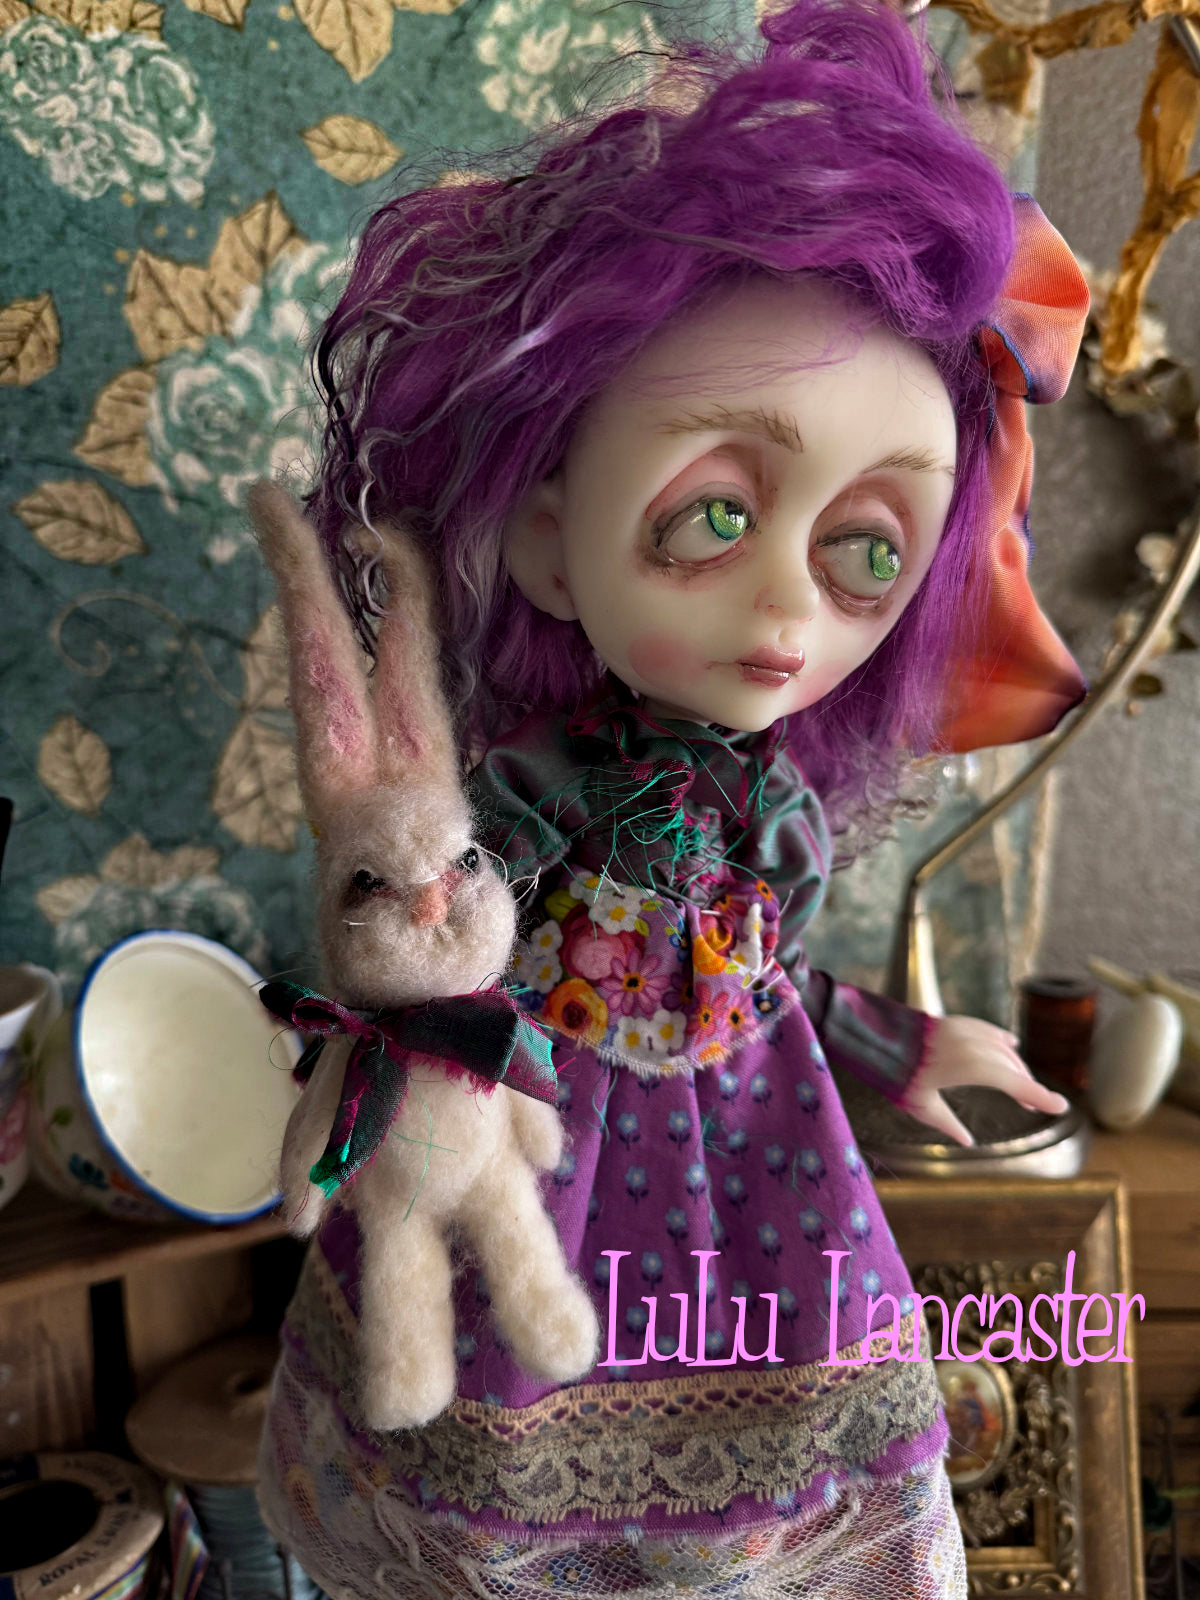 BonnieBunn Melancholy Original LuLu Lancaster Art Doll